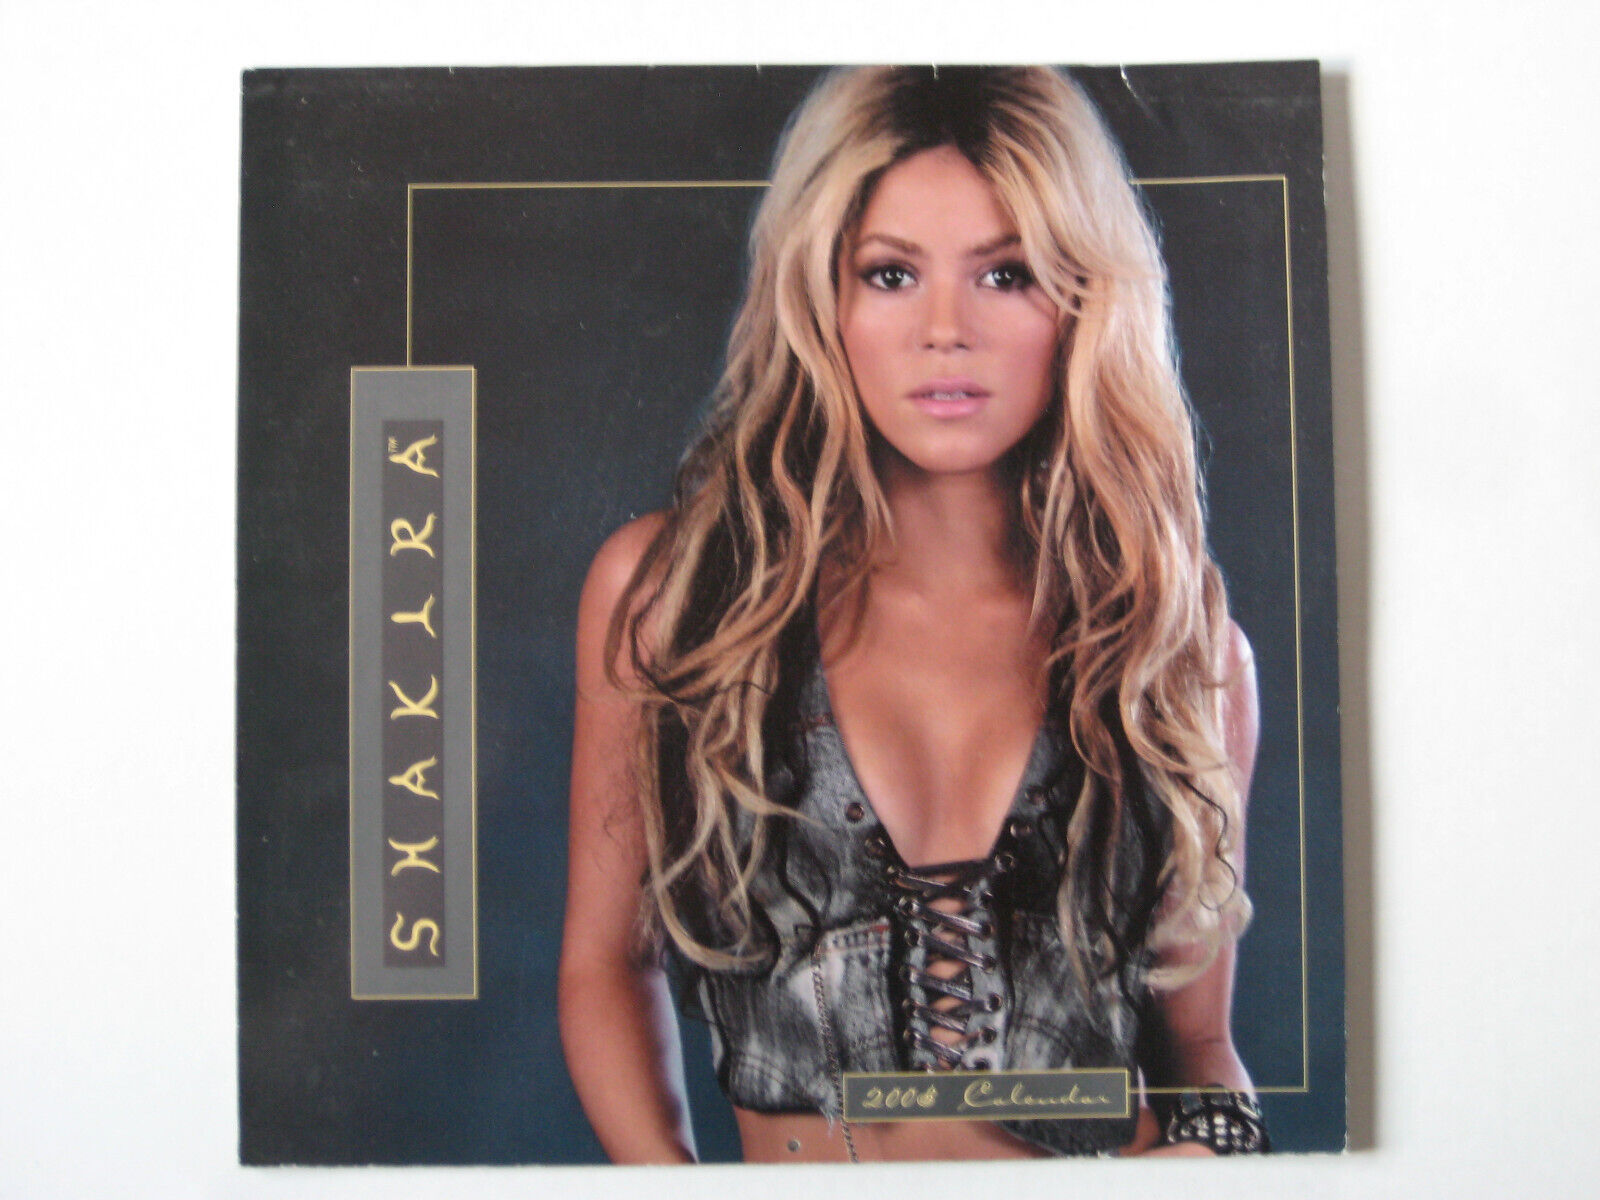 Original Shakira 2003 Calendar Used